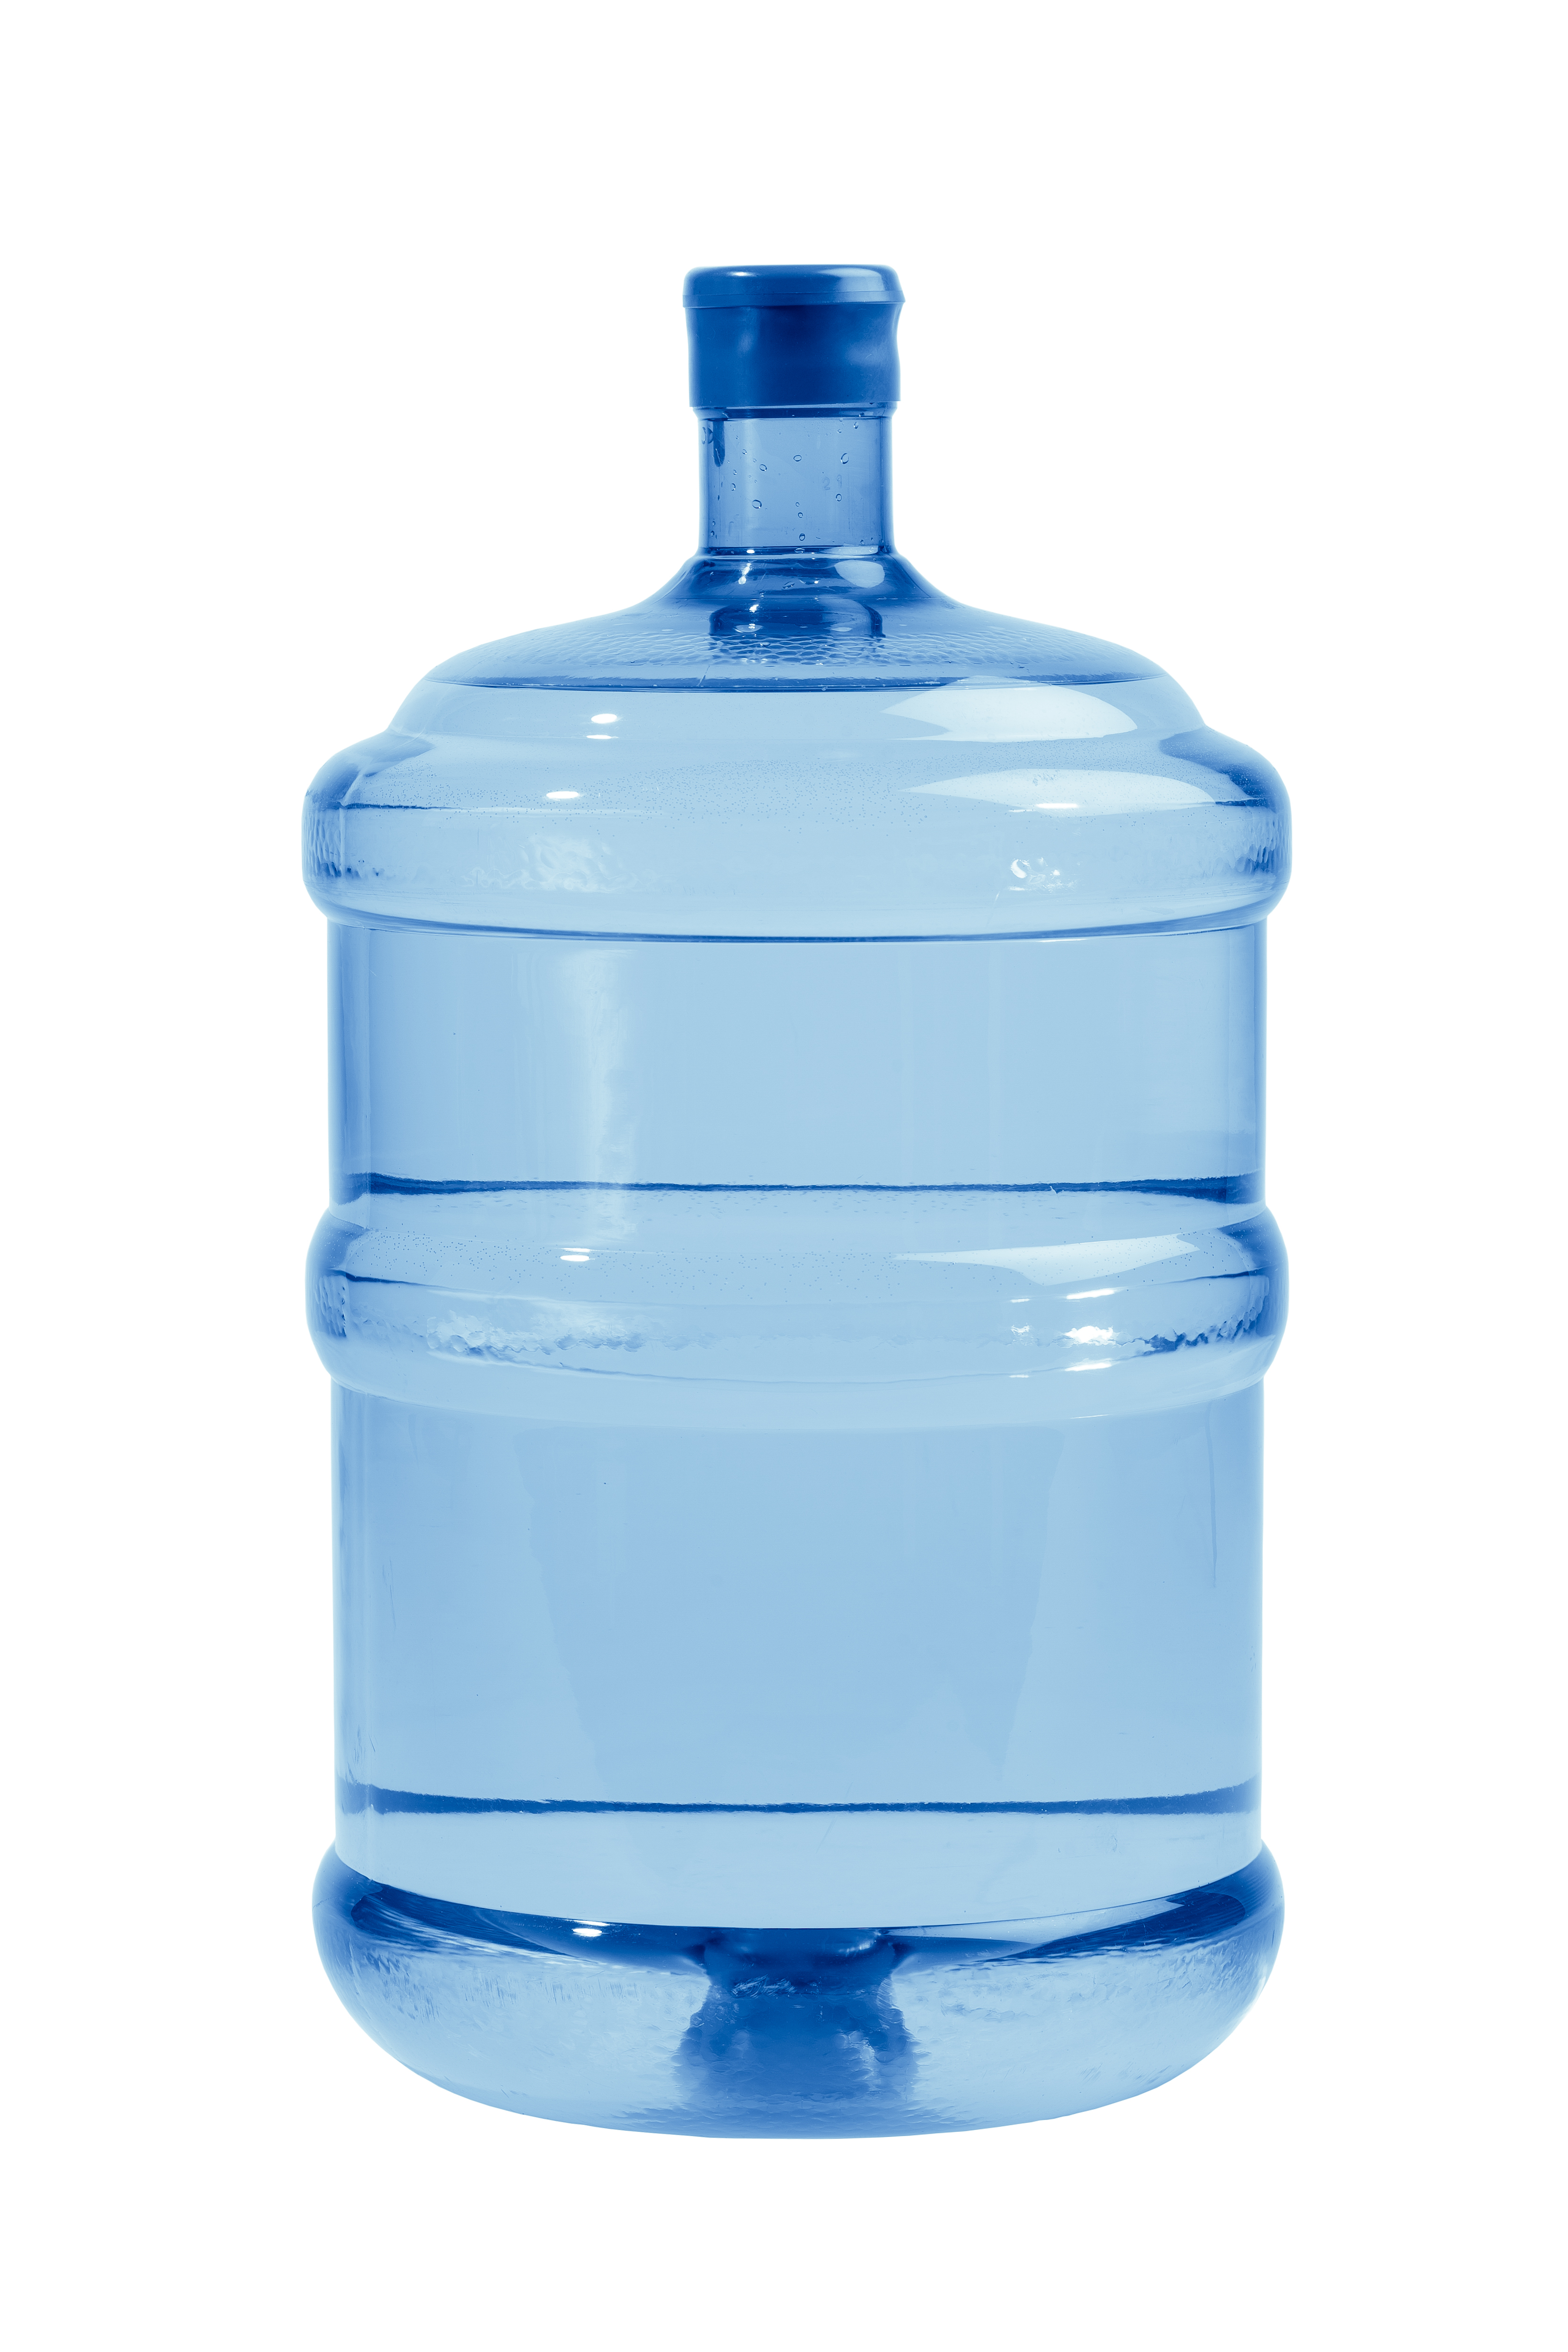 transparent, blue 5-gallon water cooler bottle